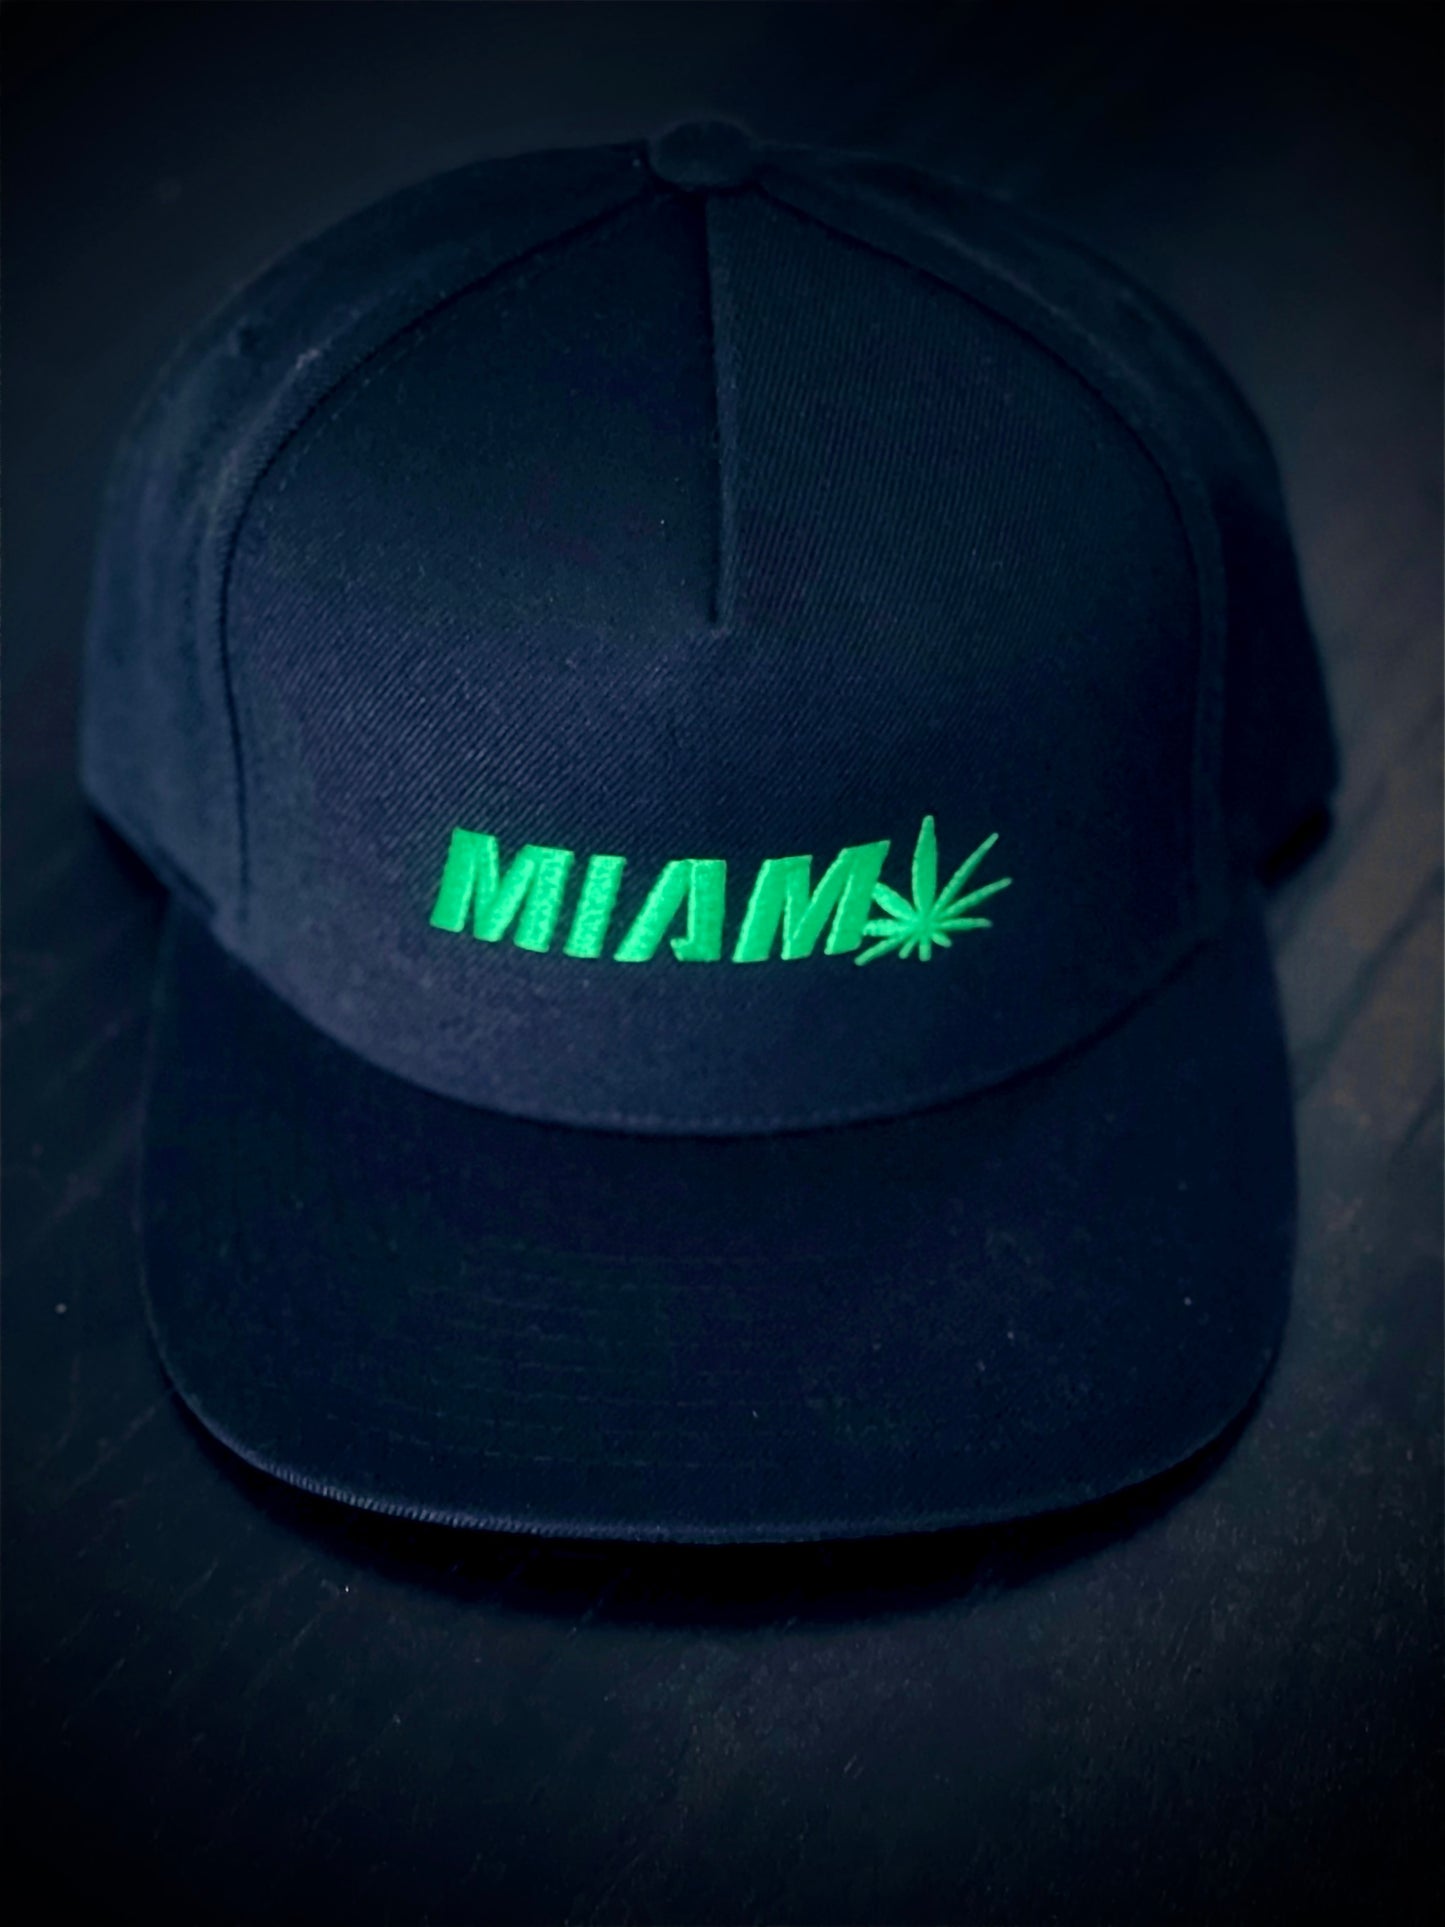 Miami Just Blazed Hat